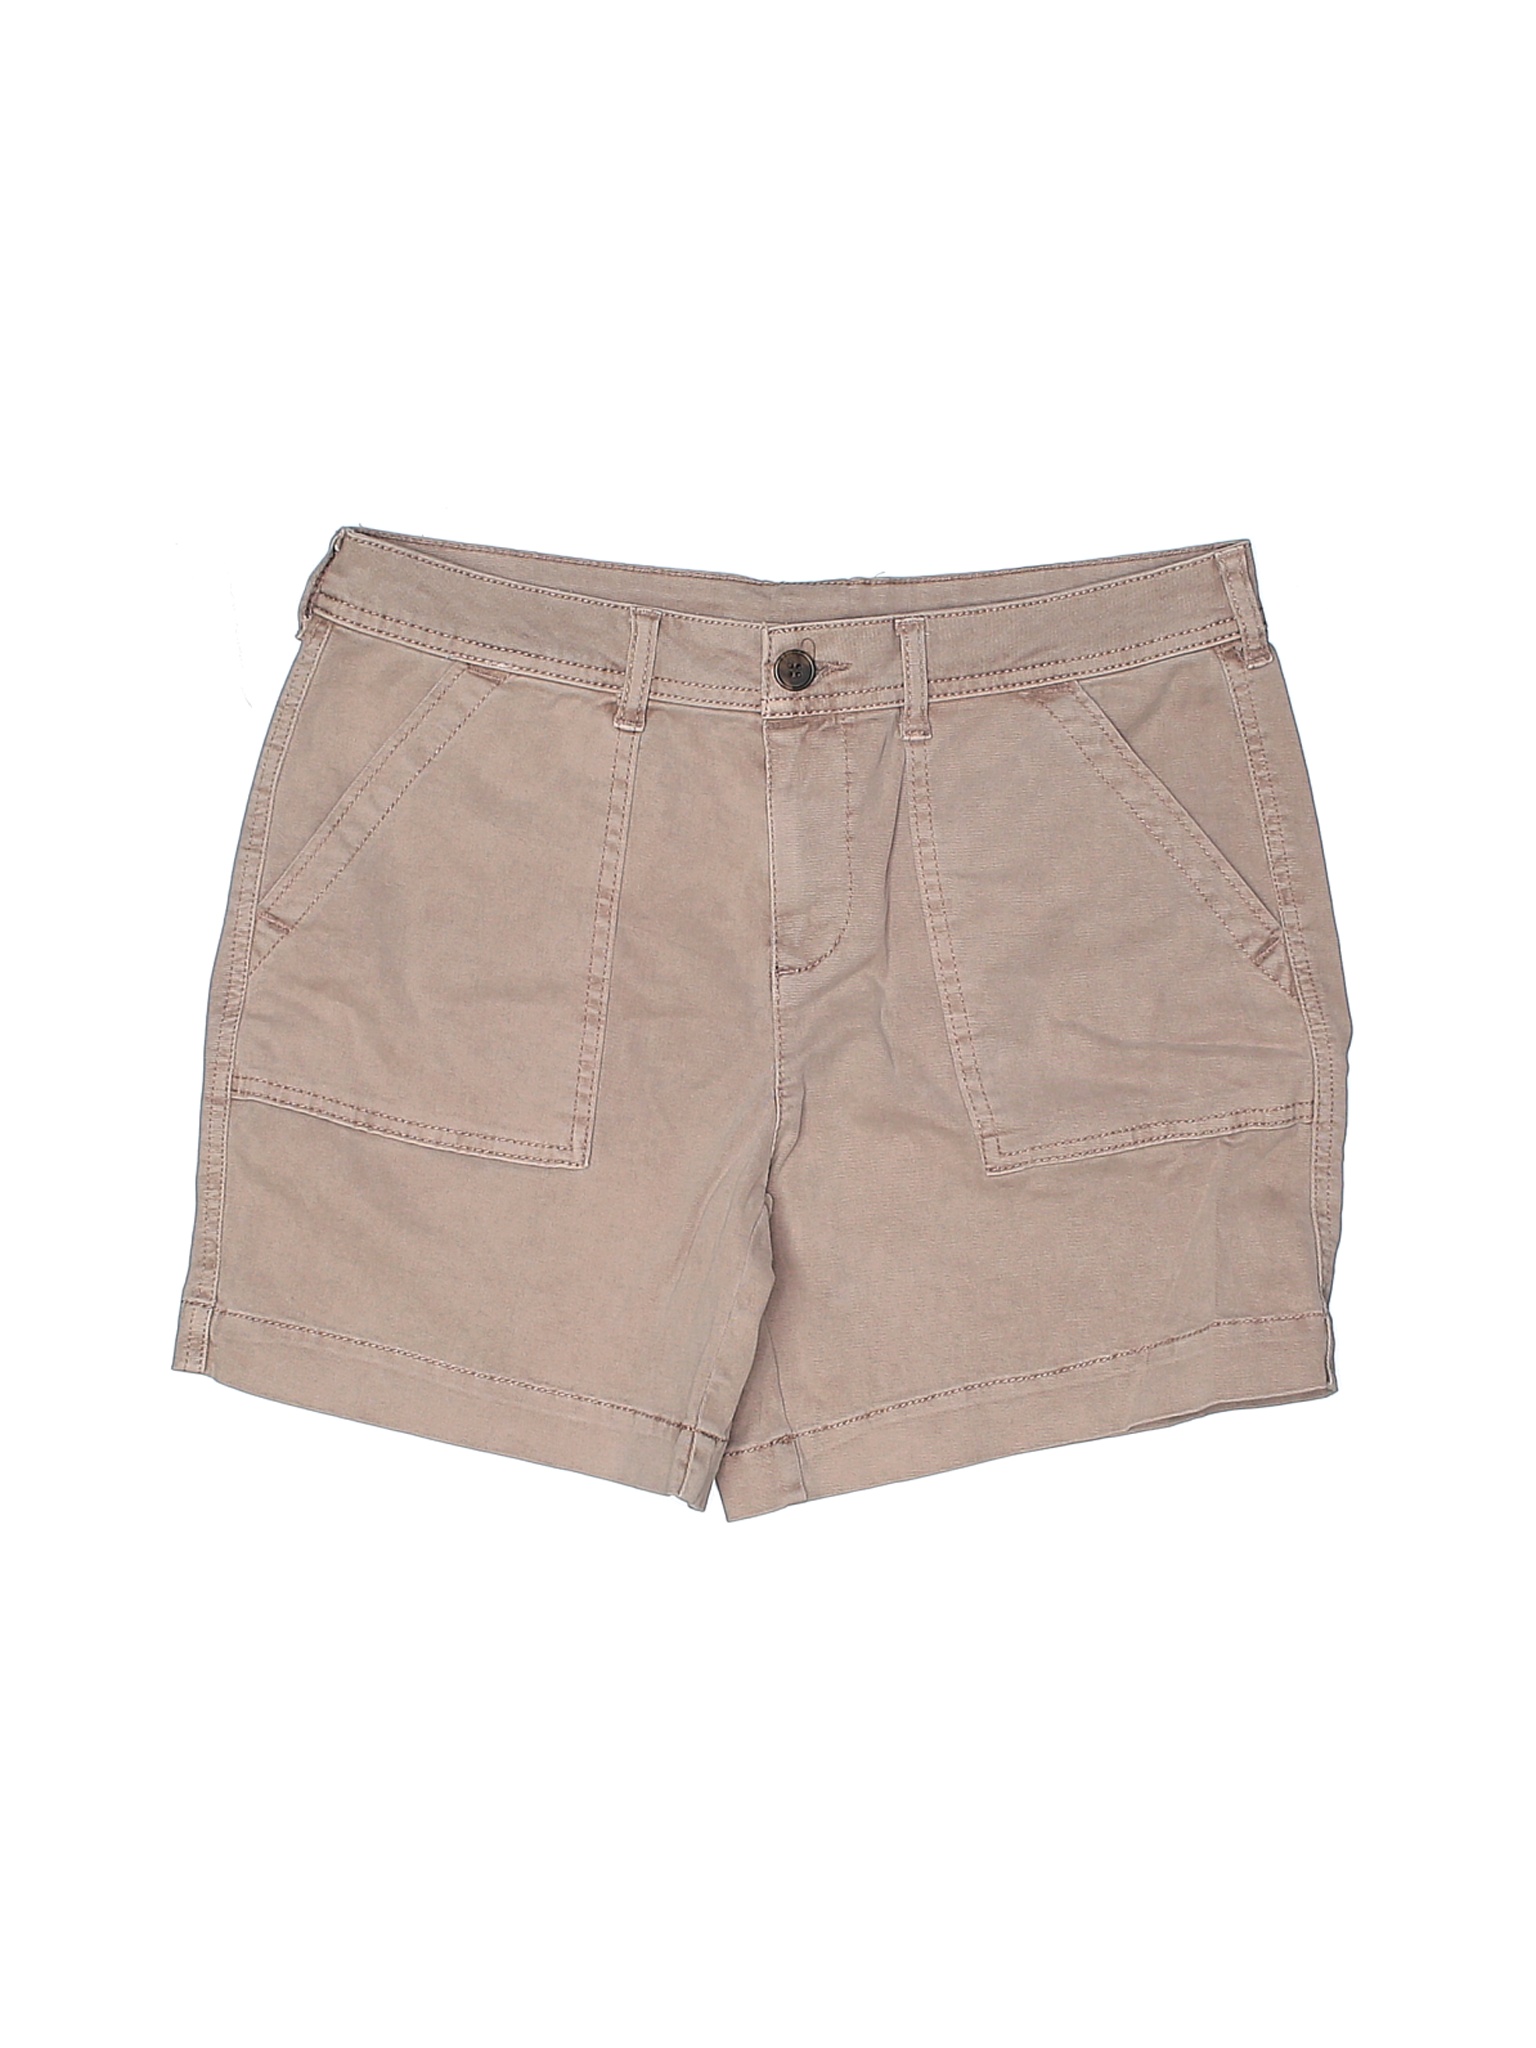 C&C California Women Brown Khaki Shorts 6 | eBay